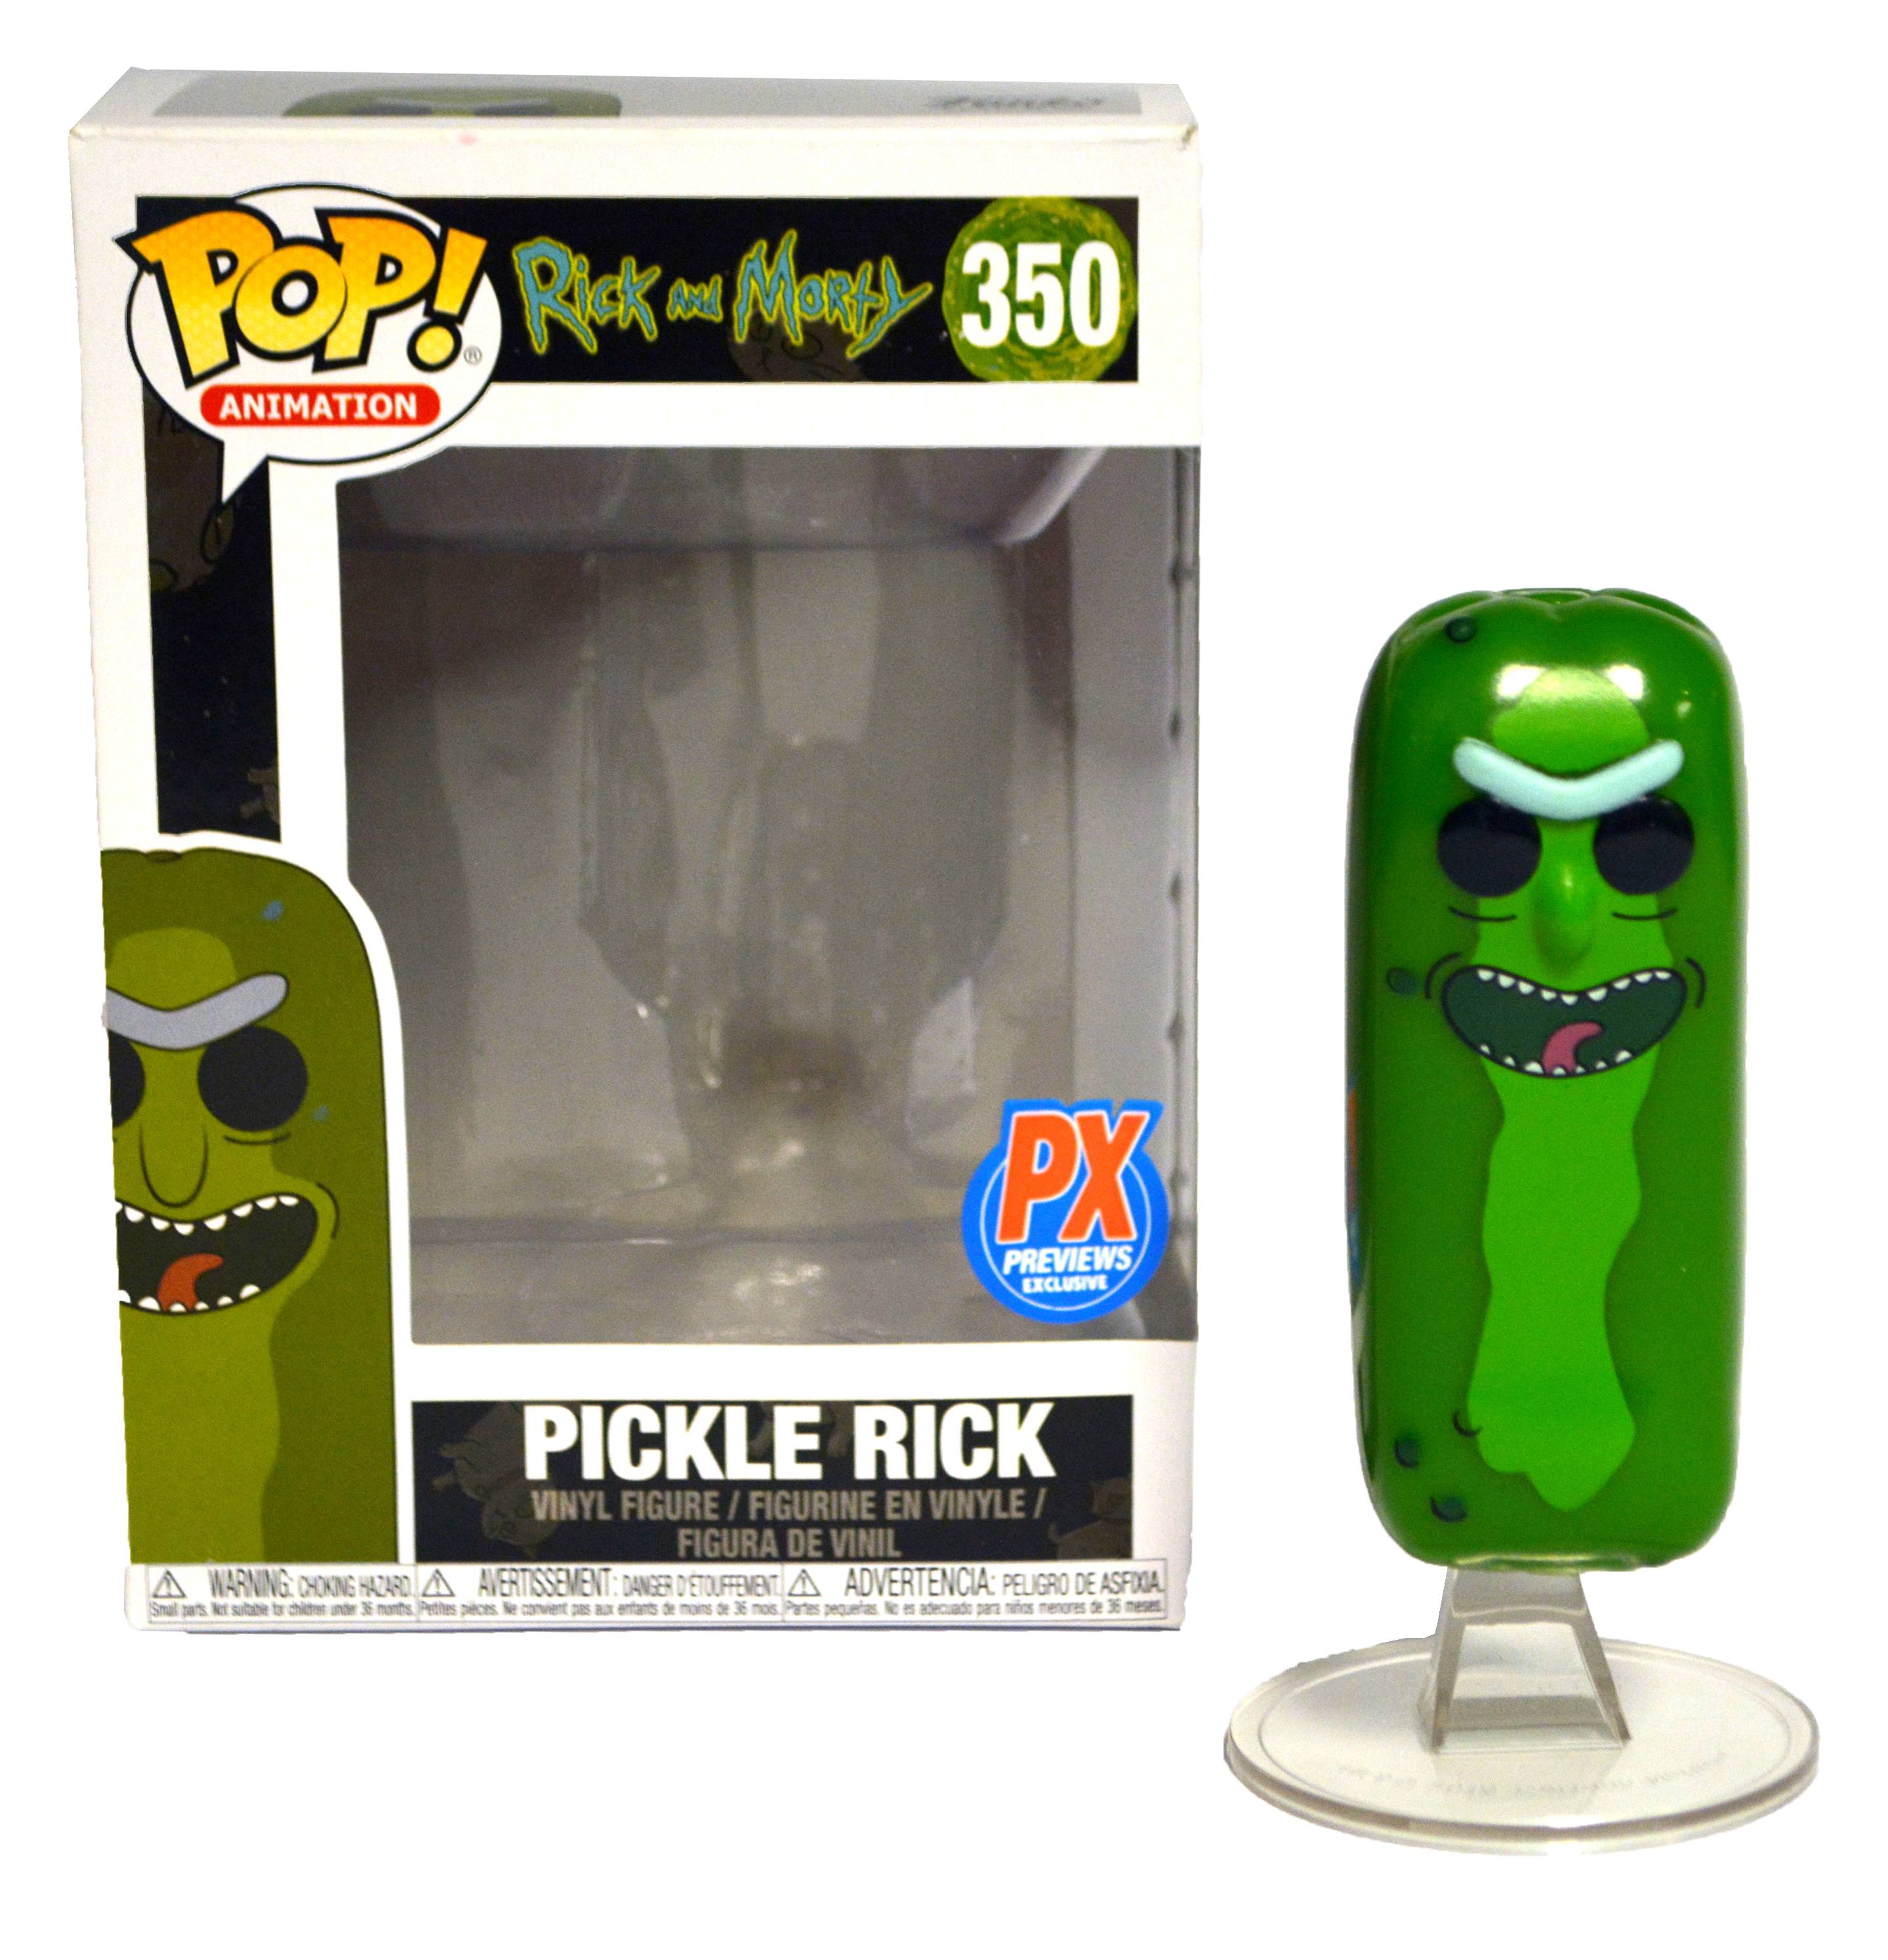 Pop Rick and Morty Pickle Rick No Limbs Px Vinyl Figure